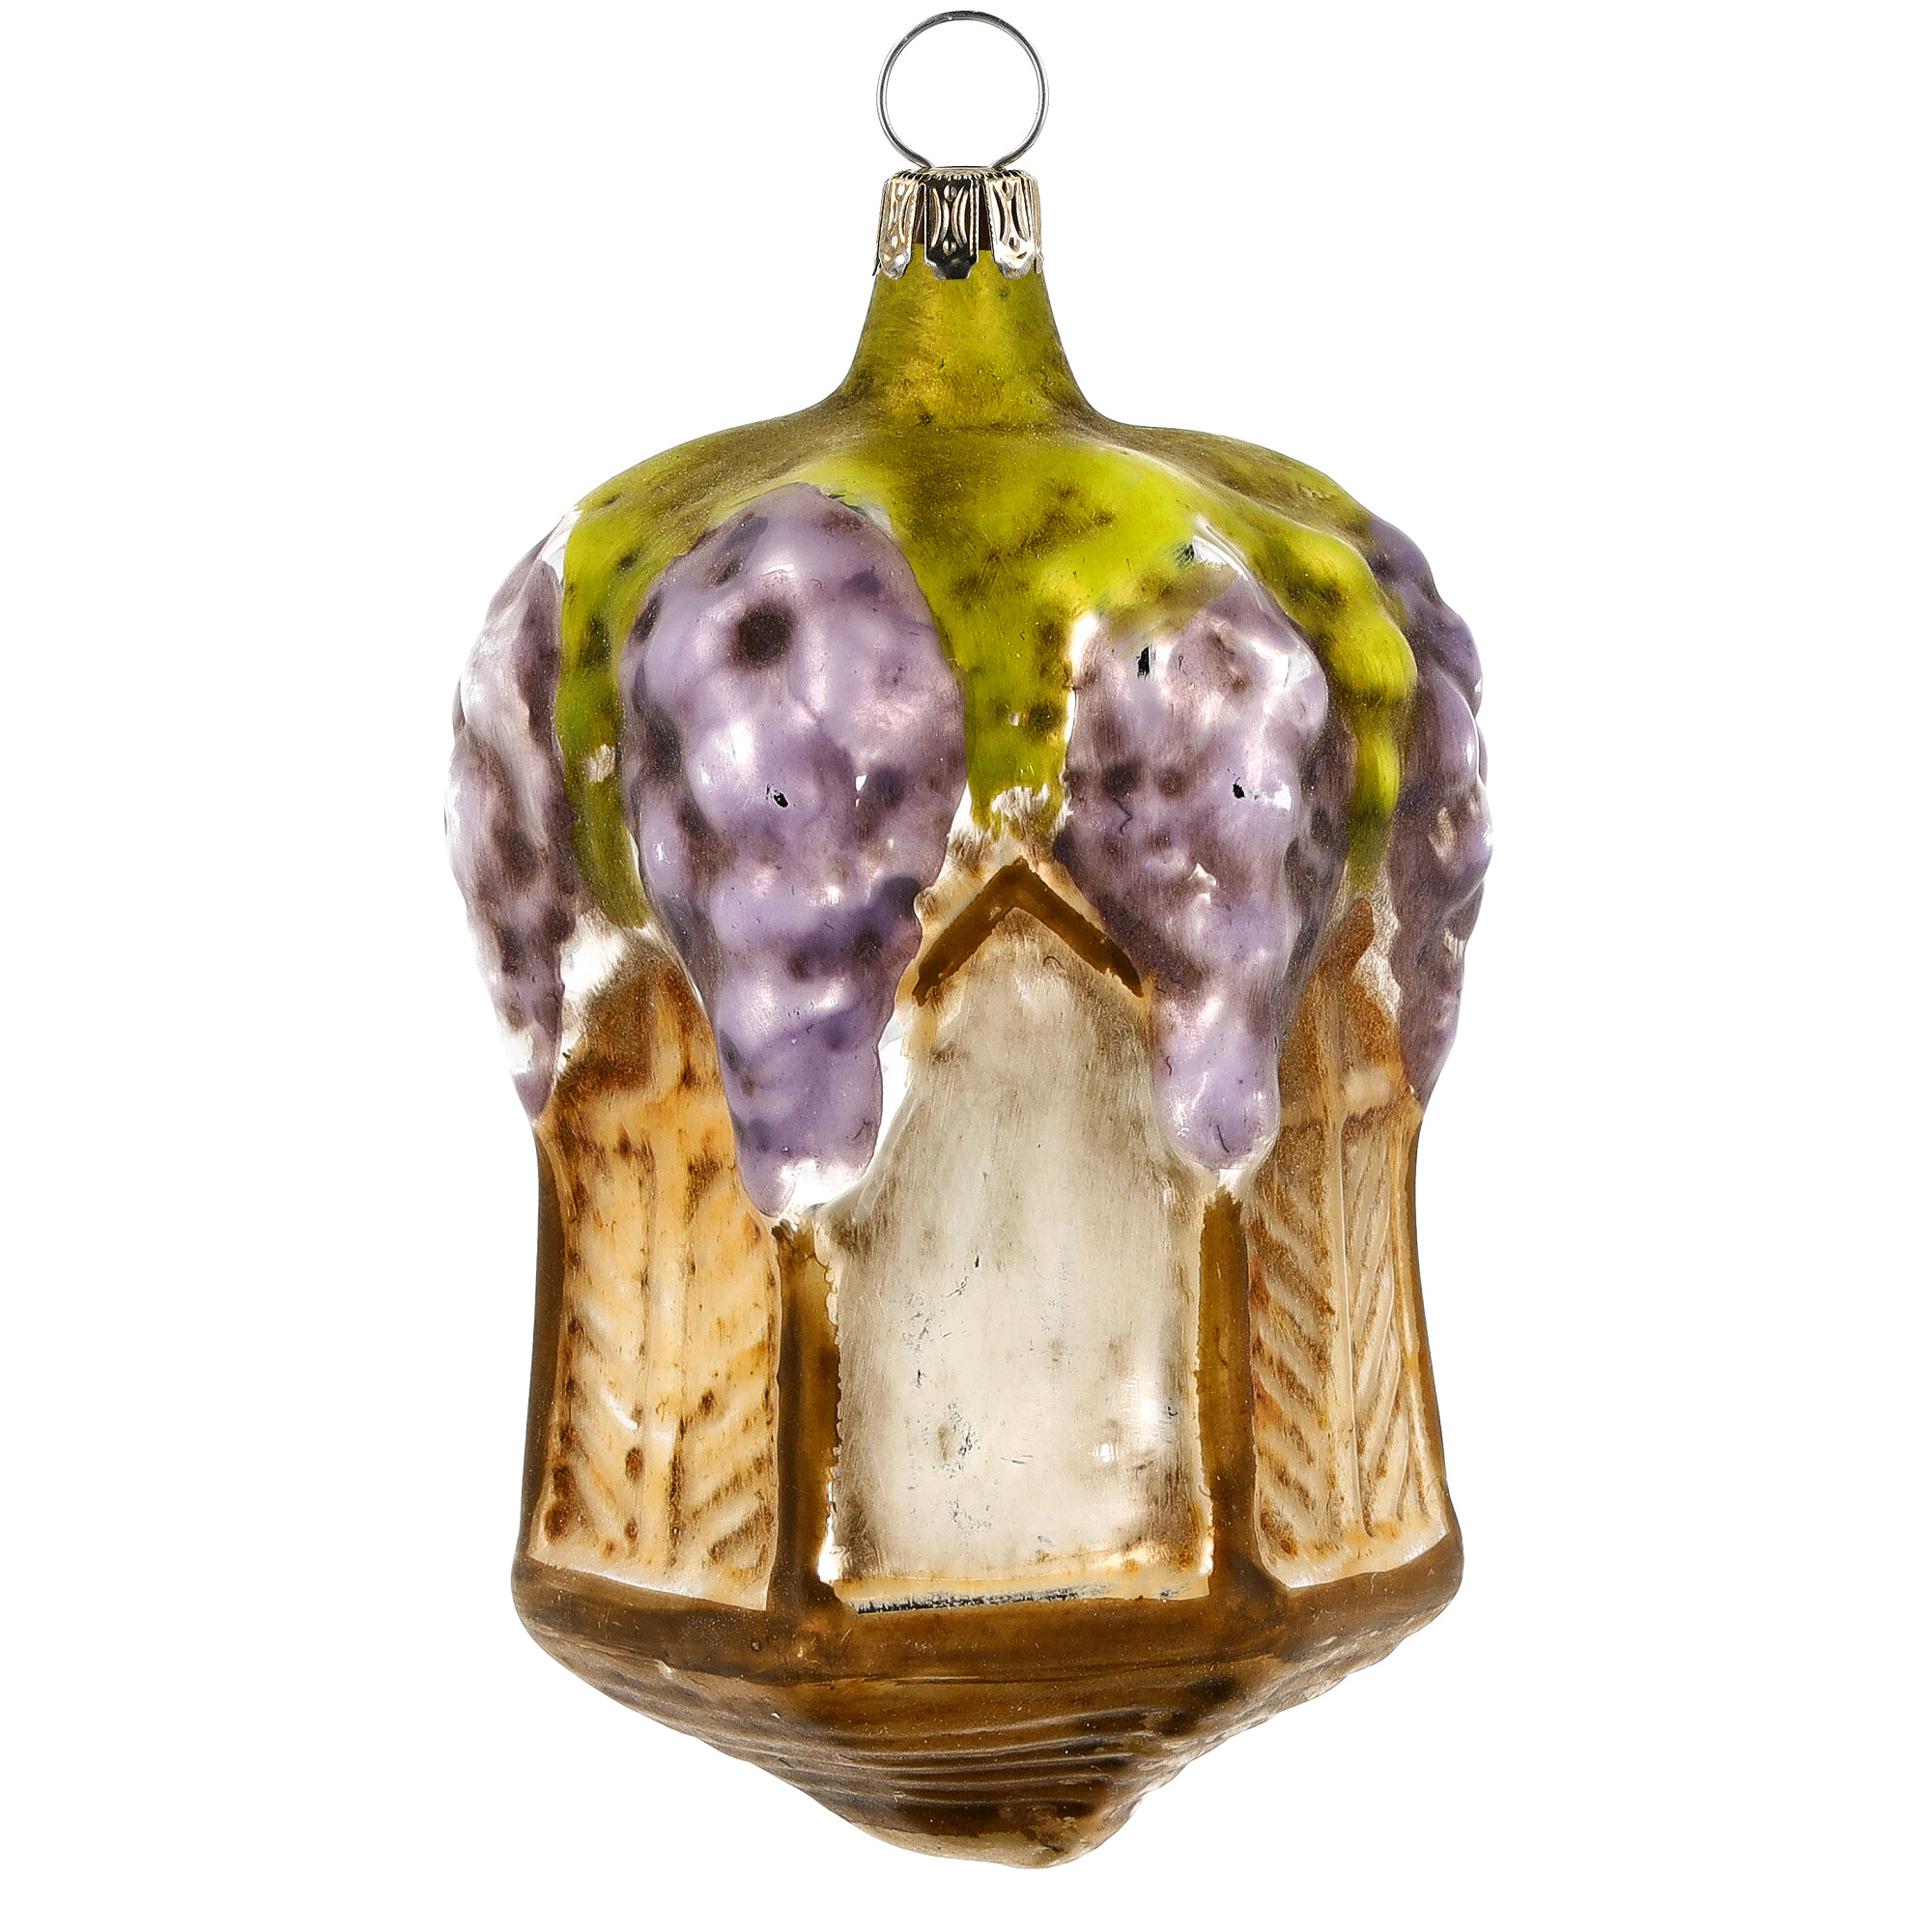 Retro Vintage style Christmas Glass Ornament - Large pavillion with grapes